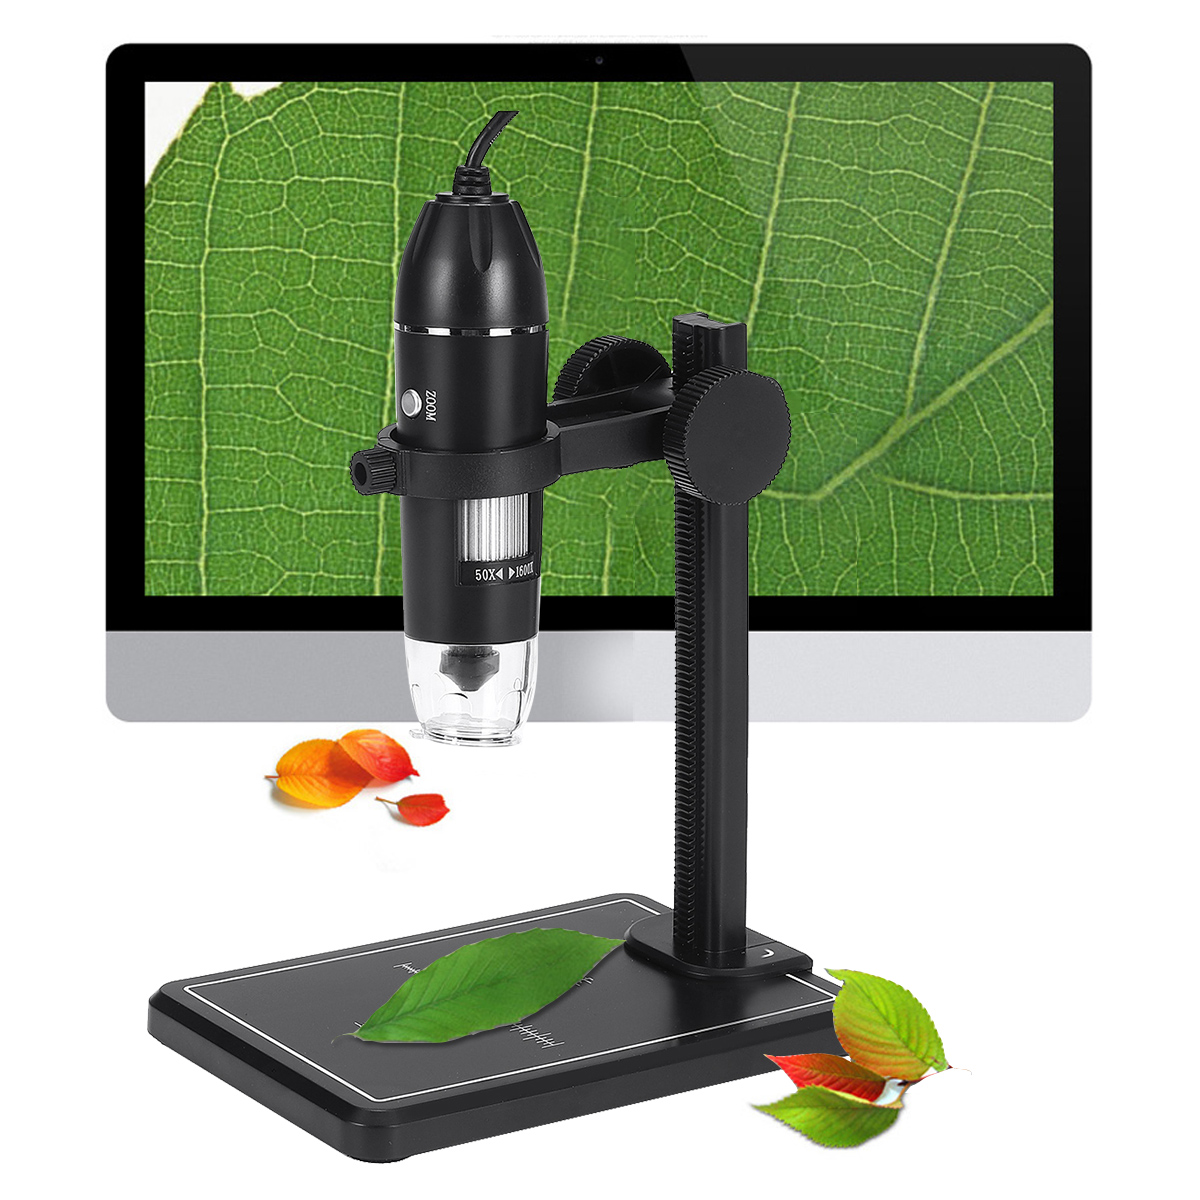 1600X 8LED 2MP USB Digital Microscope Borescope Magnifier Camera +Stand Holder (Black Colour)